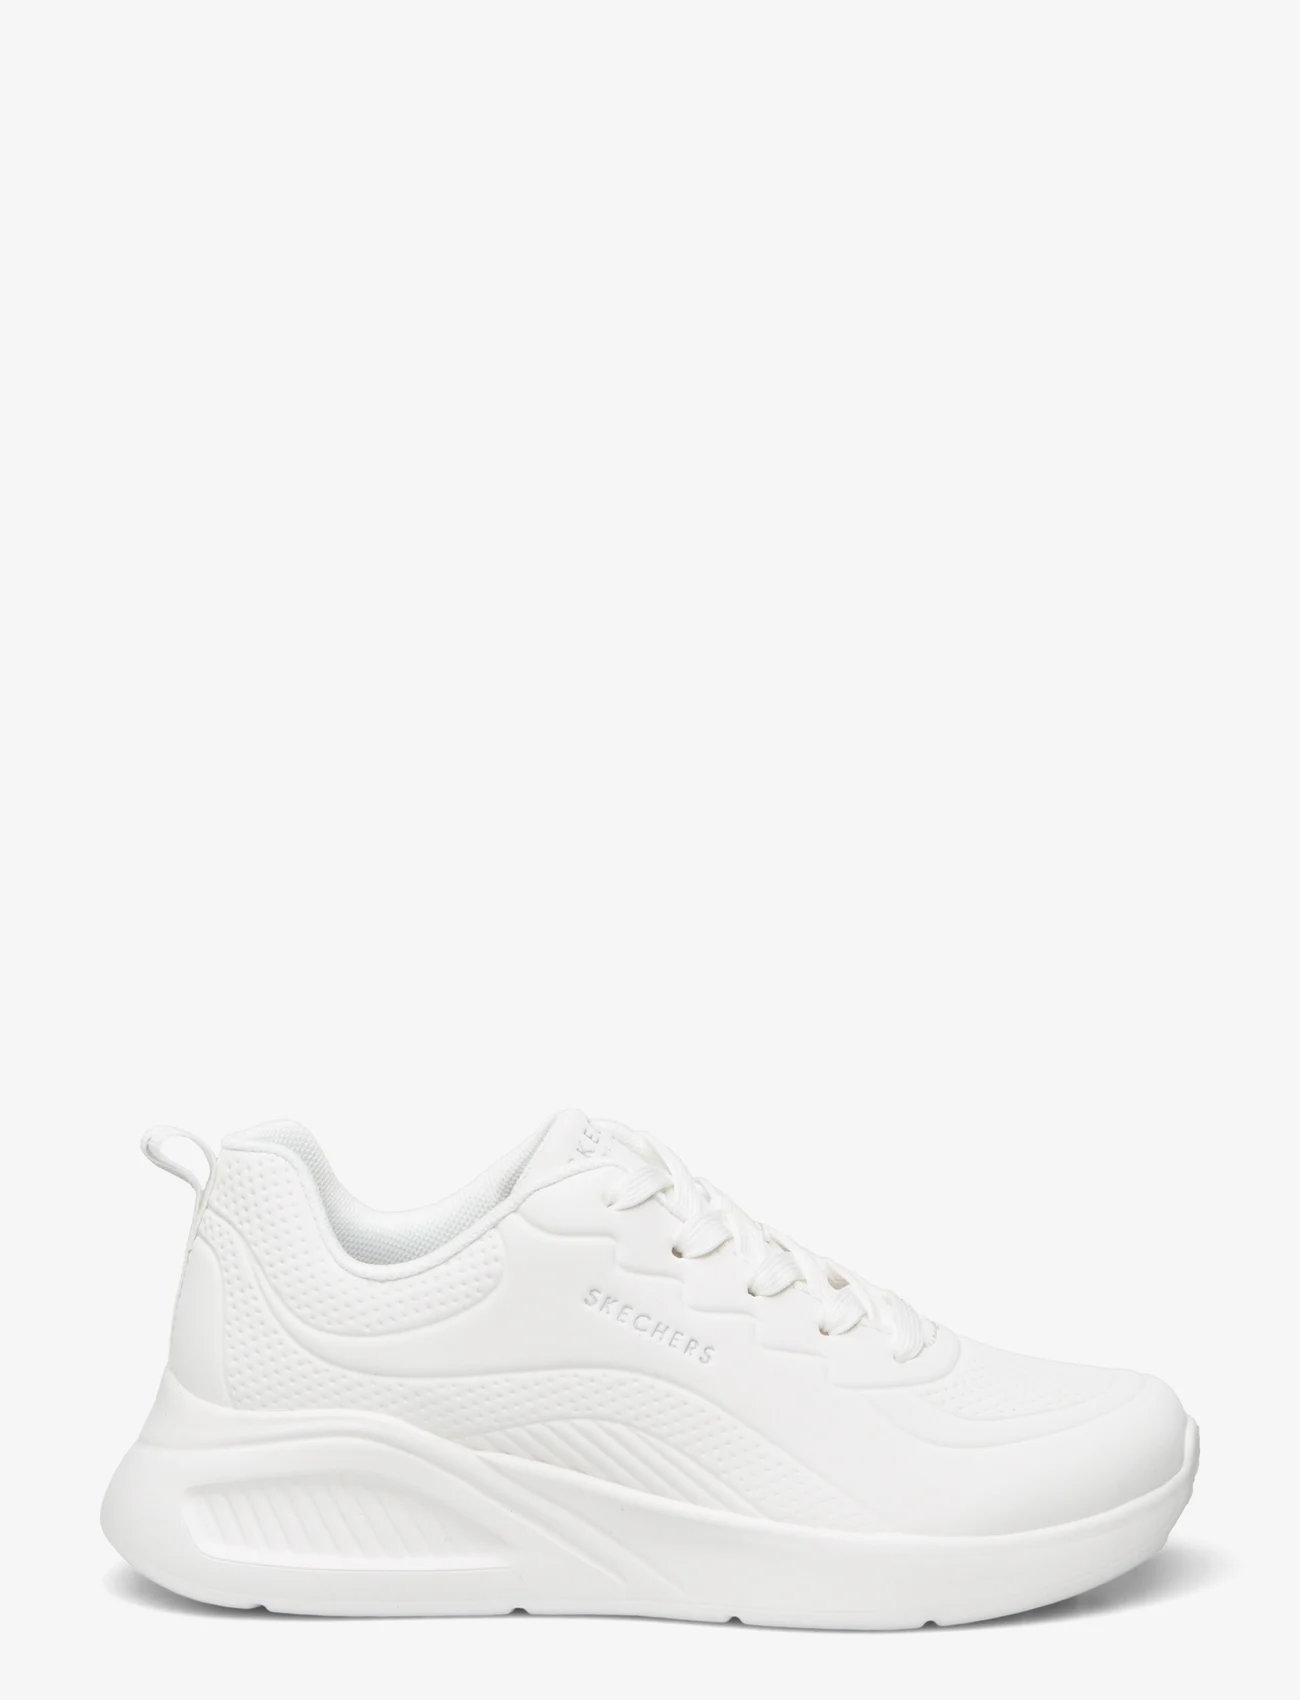 Skechers - Womens Uno Lite - Lighter One - låga sneakers - wht white - 1